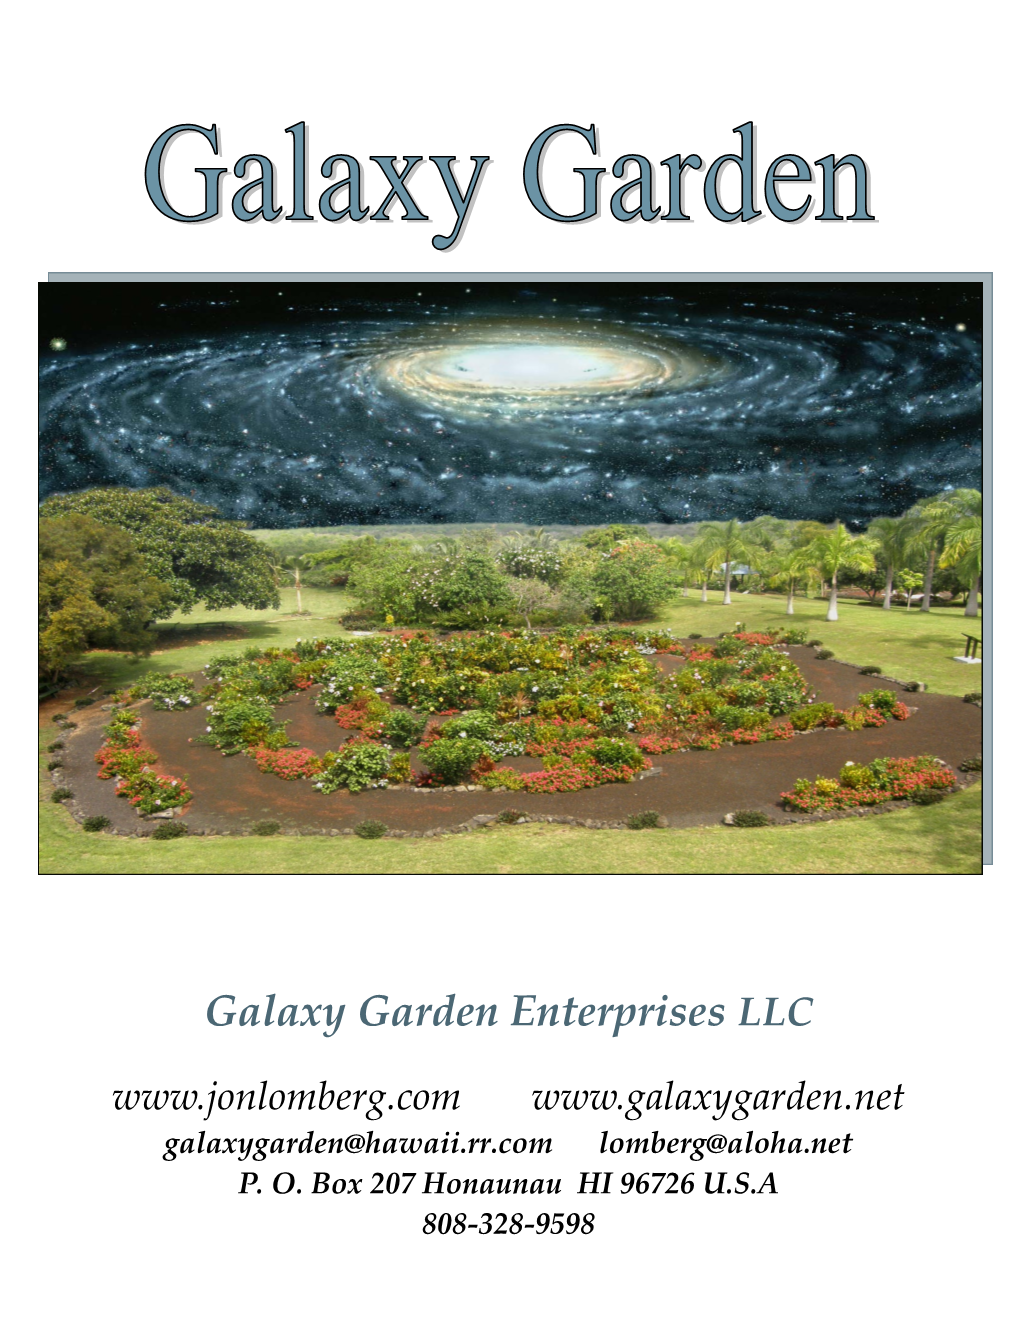 Galaxy Garden Enterprises LLC Galaxygarden@Hawaii.Rr.Com Lomberg@Aloha.Net P